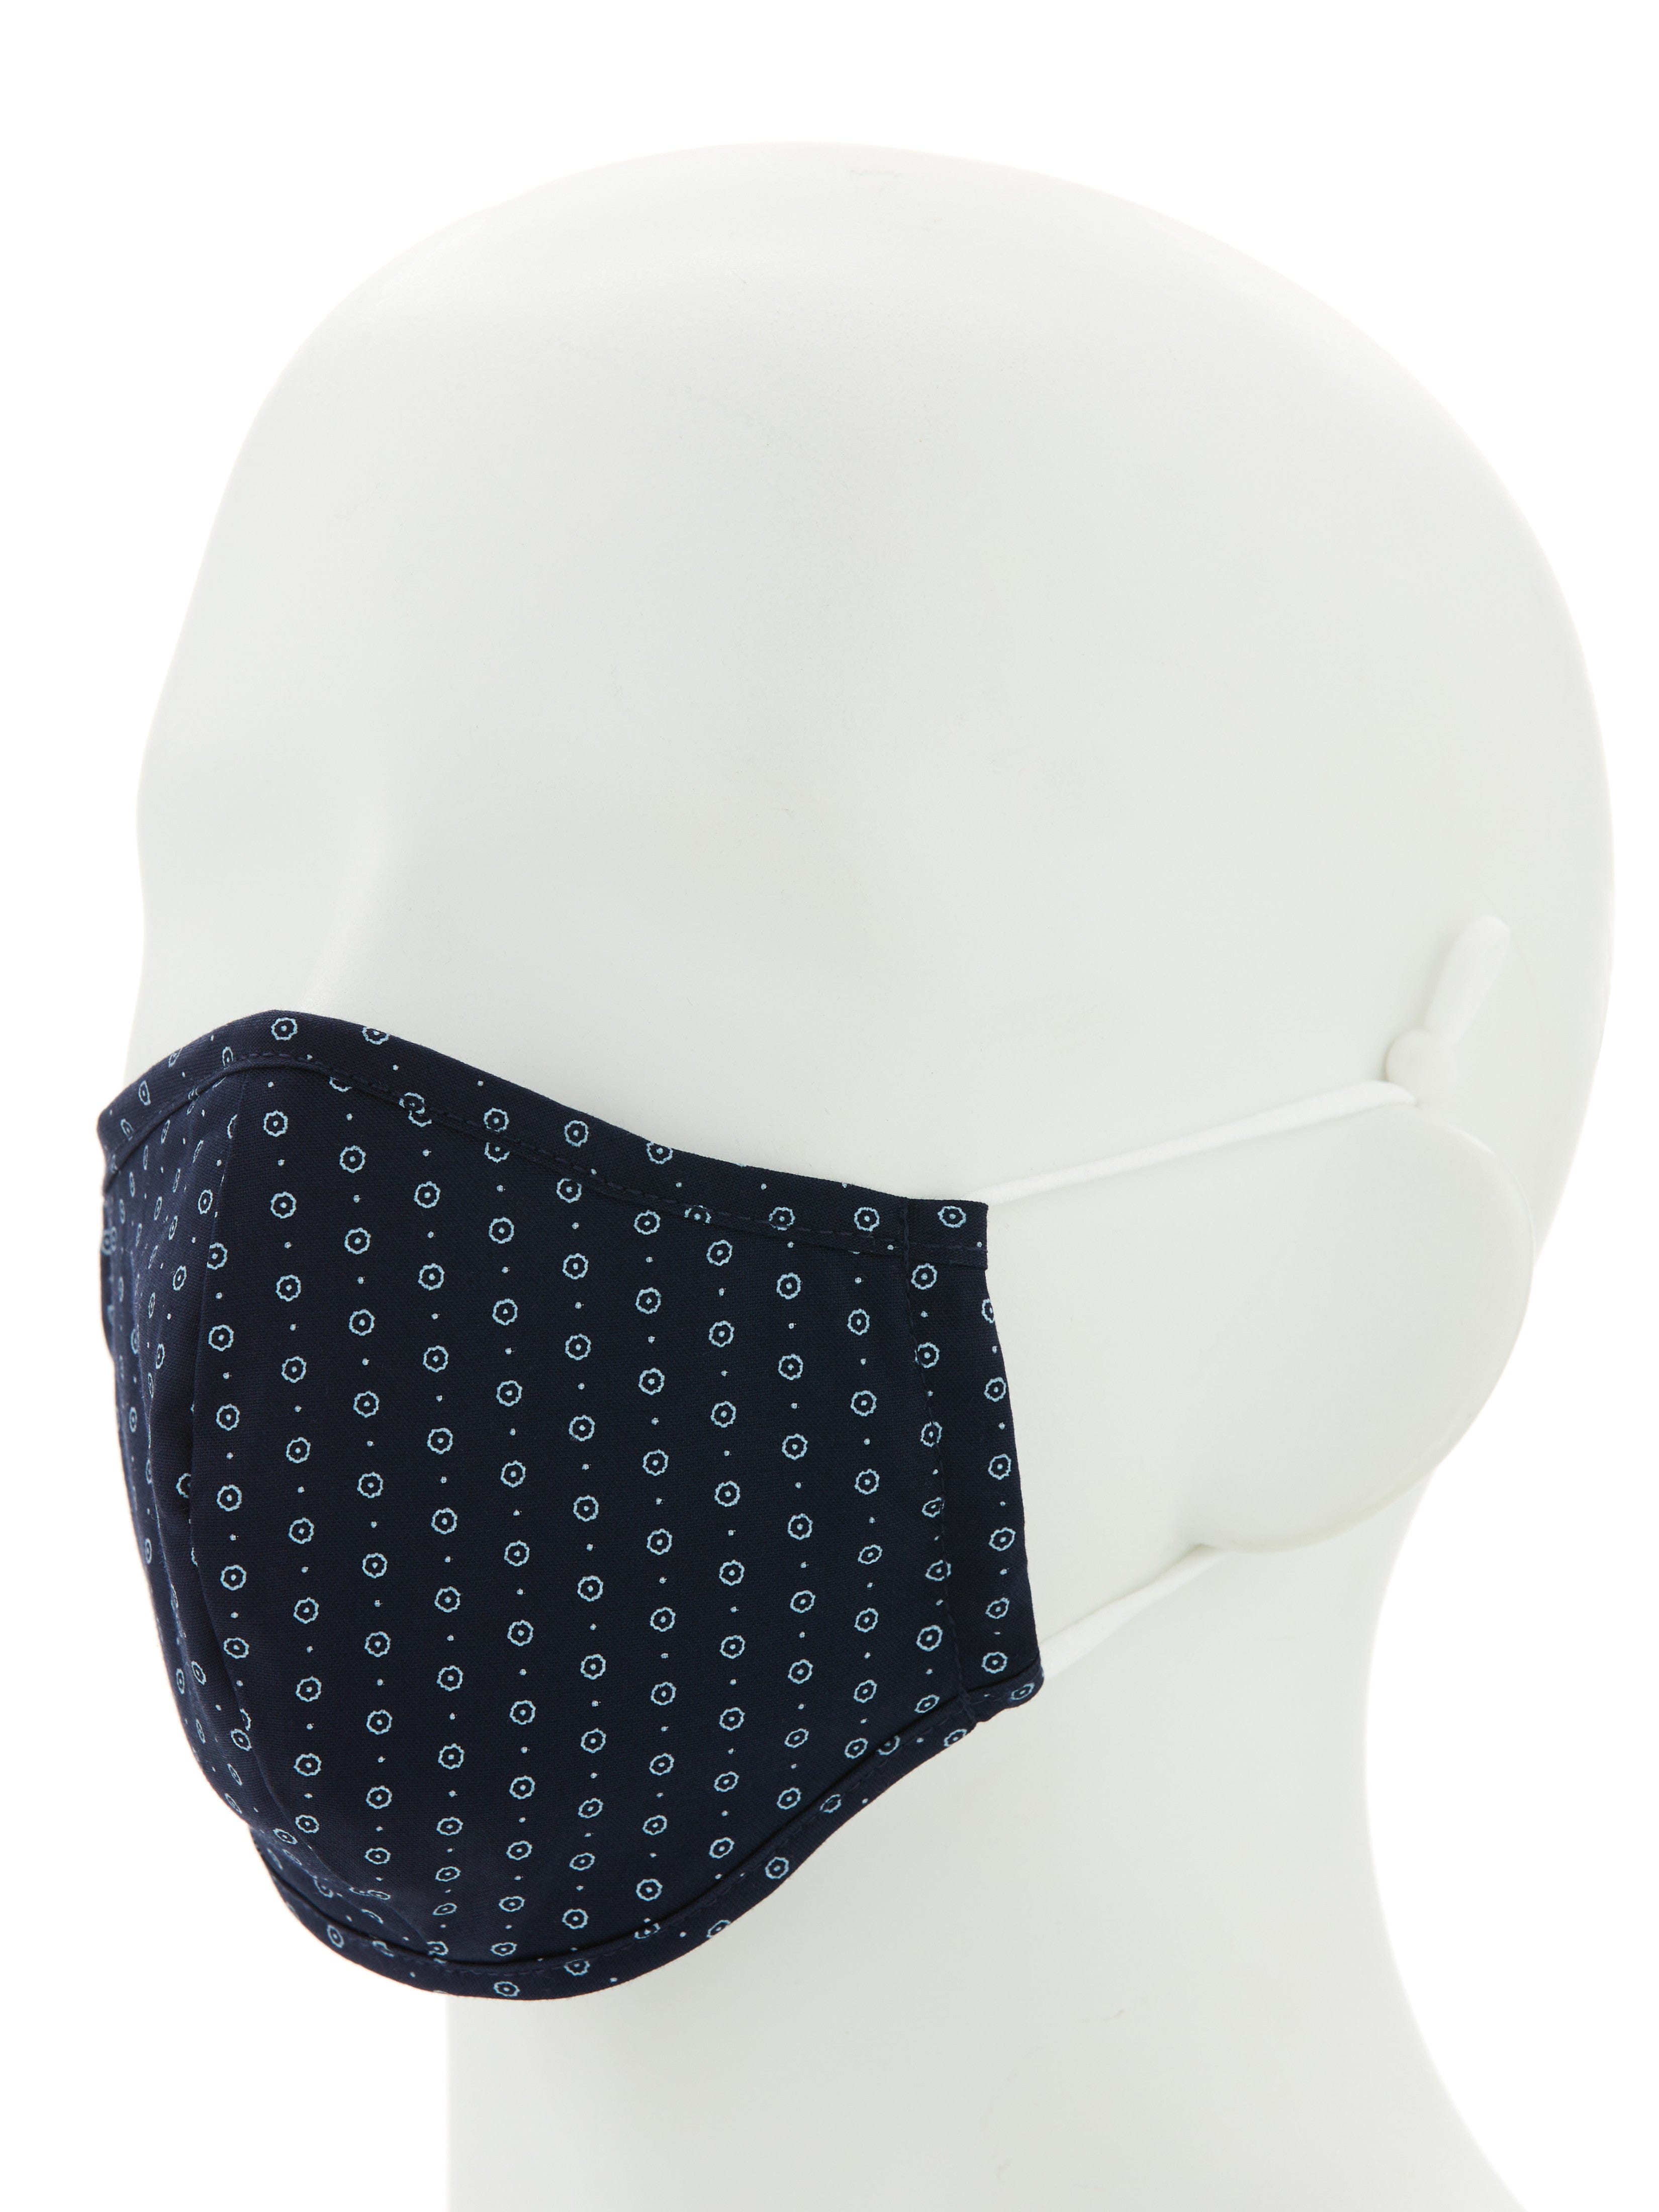 Grand Slam Poplin Print 3 Pack Rounded Face Mask, Assortment 86 White, 100% Cotton | Golf Apparel Shop